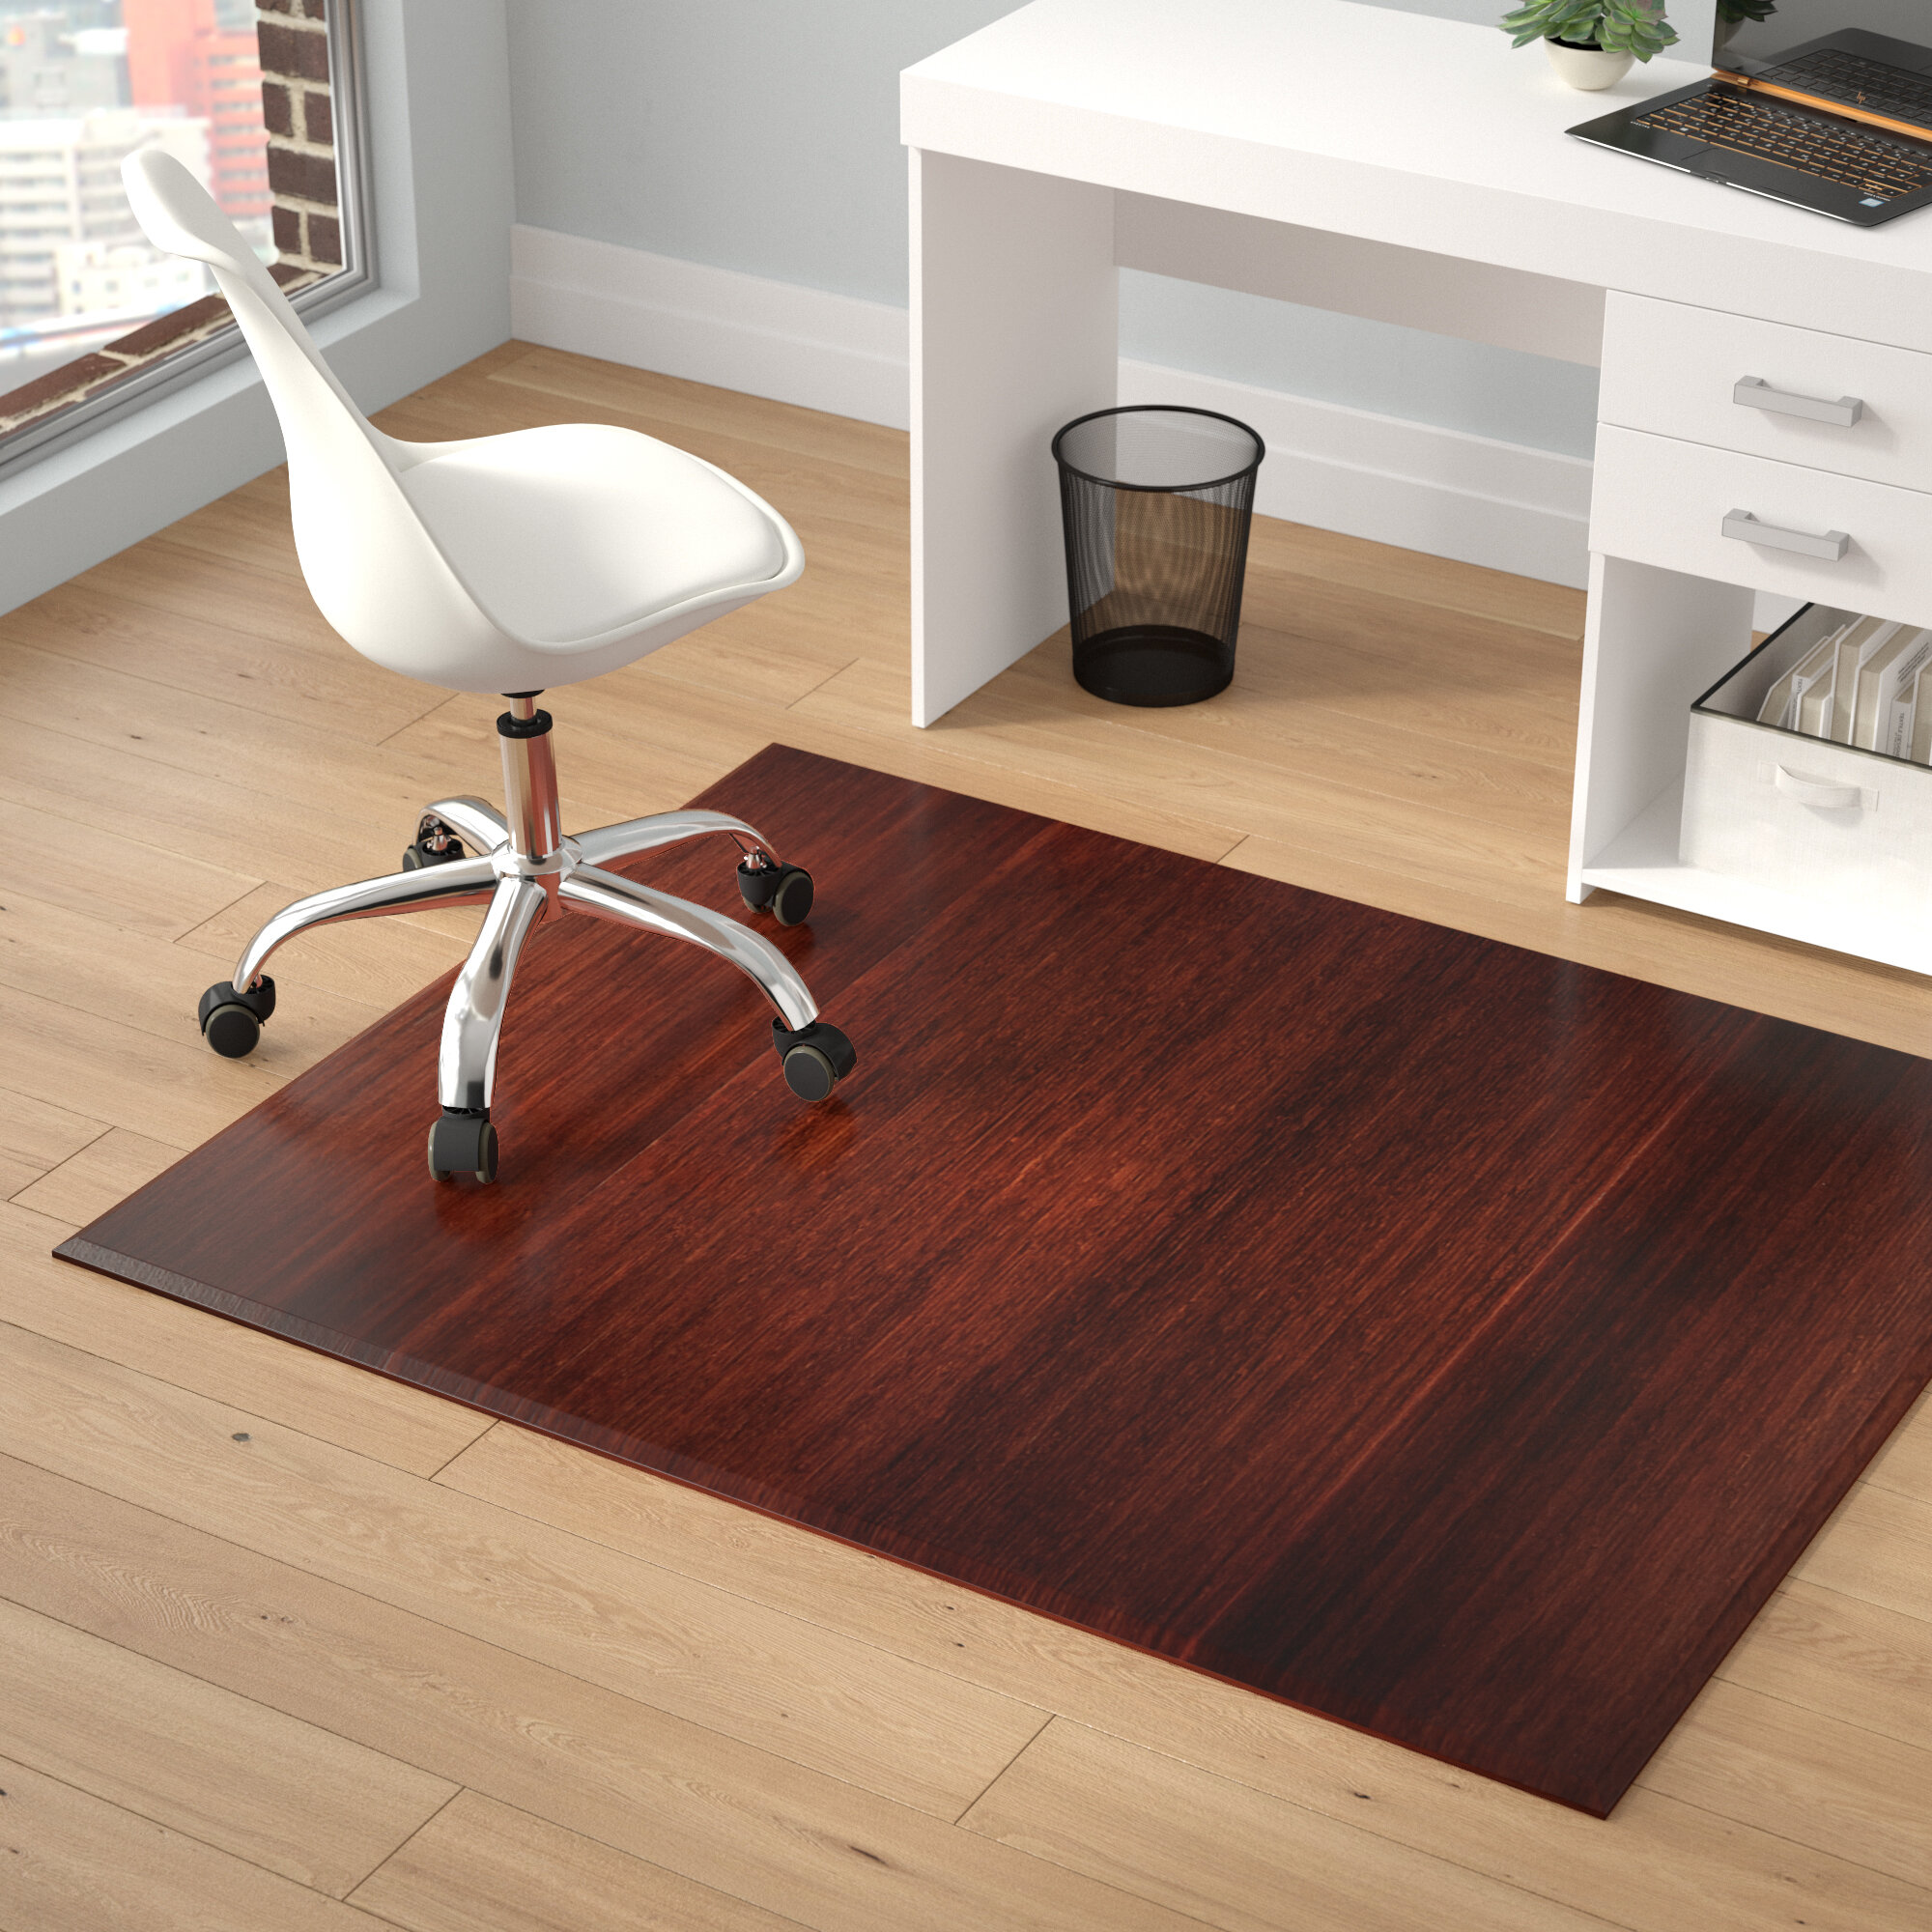 520 x Felt Furniture Pads Brown Wood Surface Floor Protector Anti Skid Slip